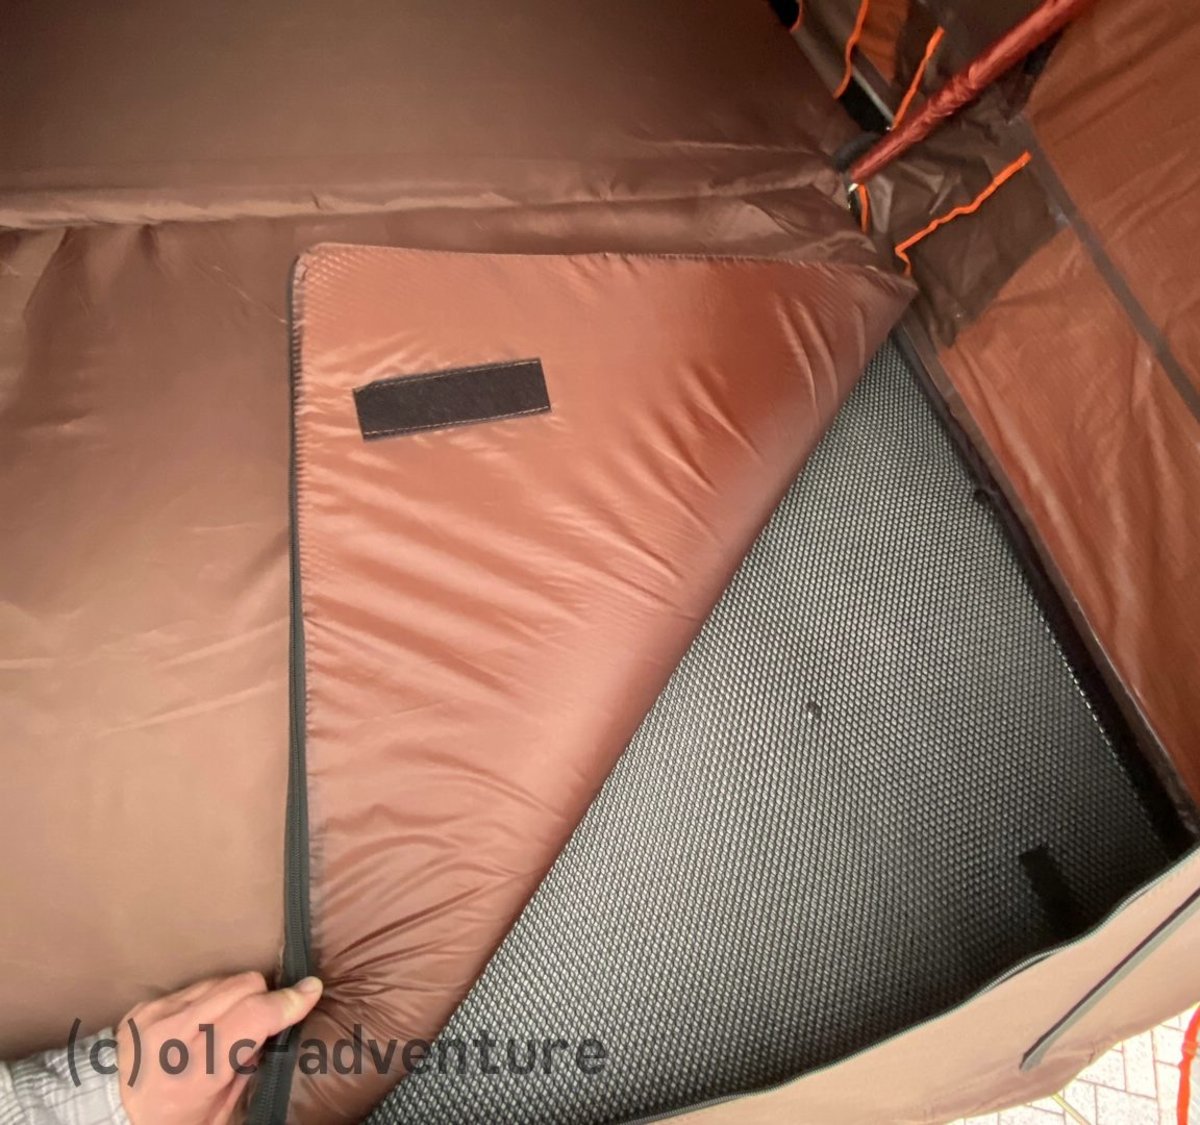 Dachzelt OLC2+2 OLC-Adventure Camping 